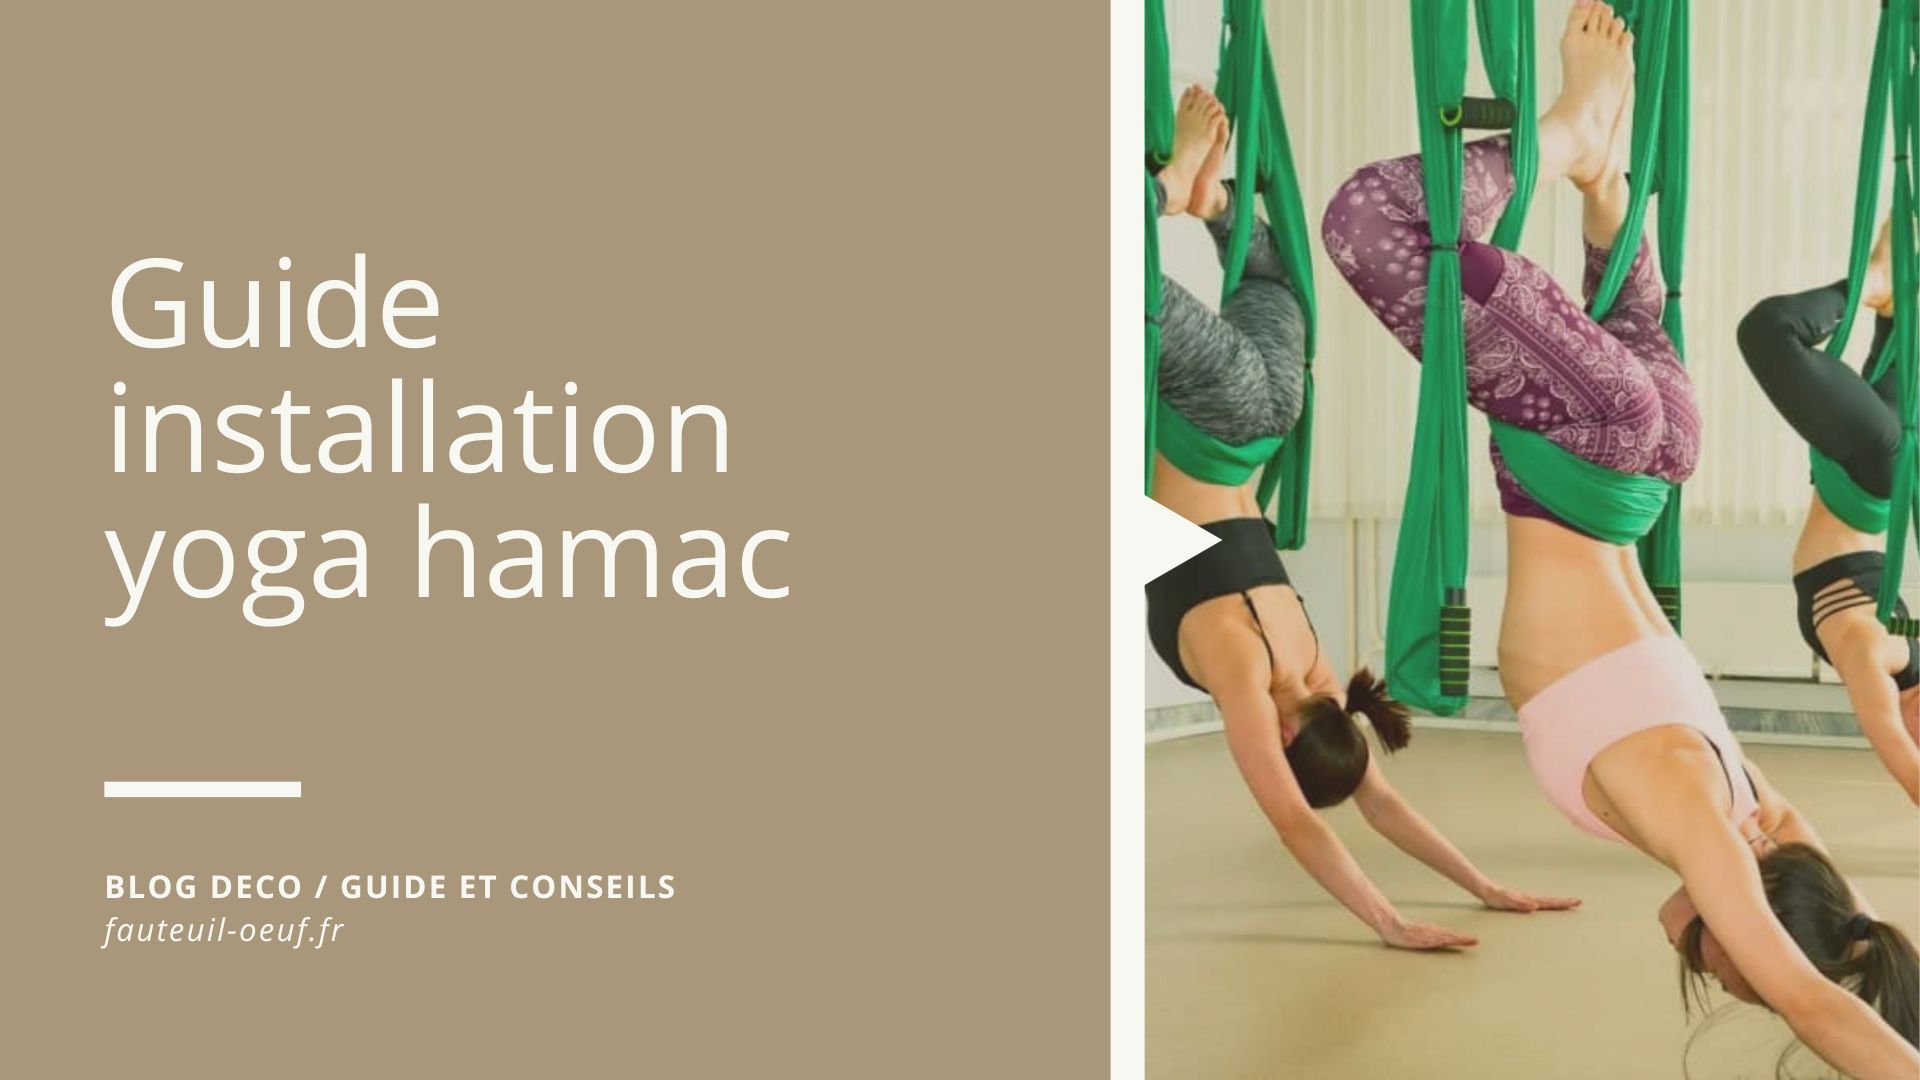 Guide installation yoga hamac